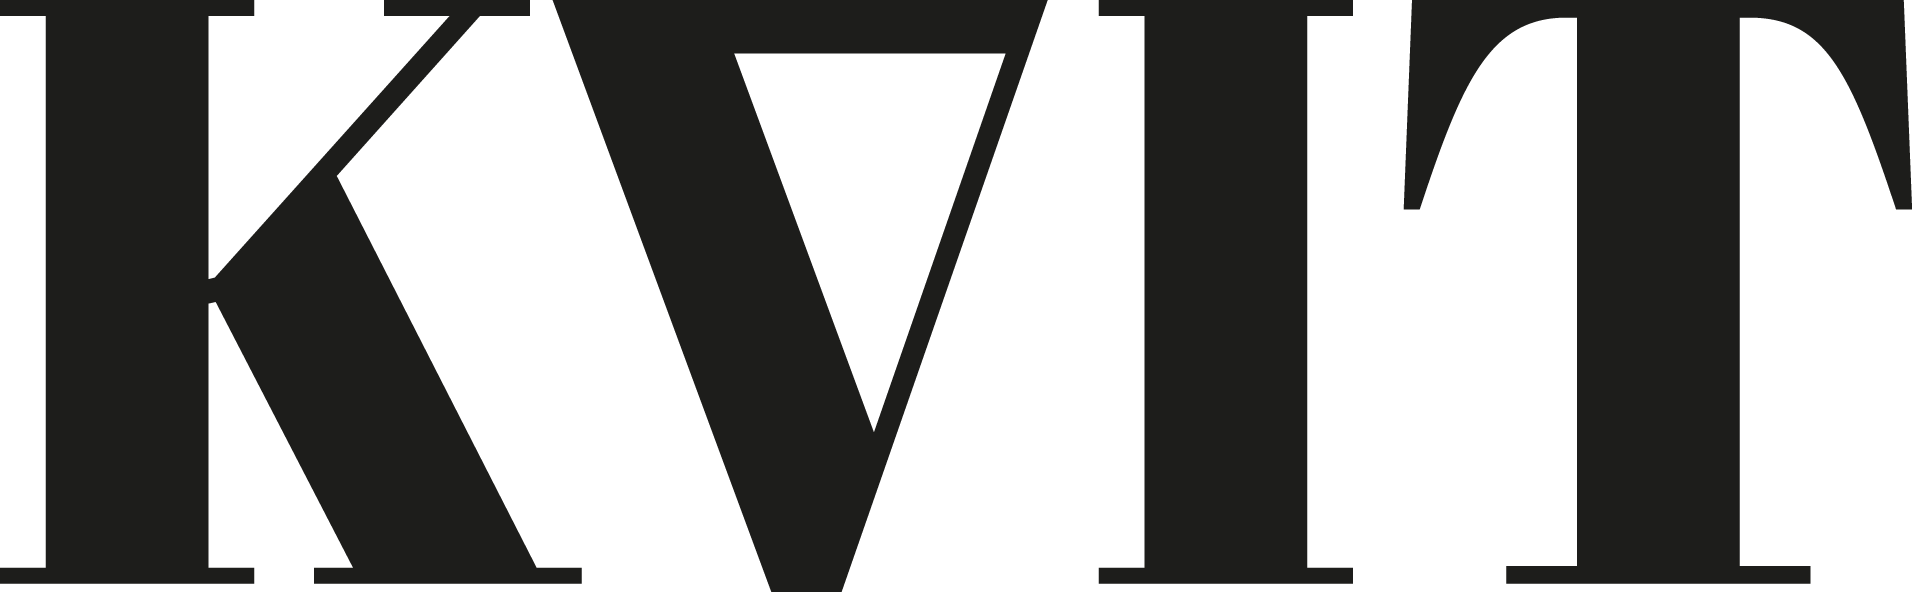 Logos Kvit